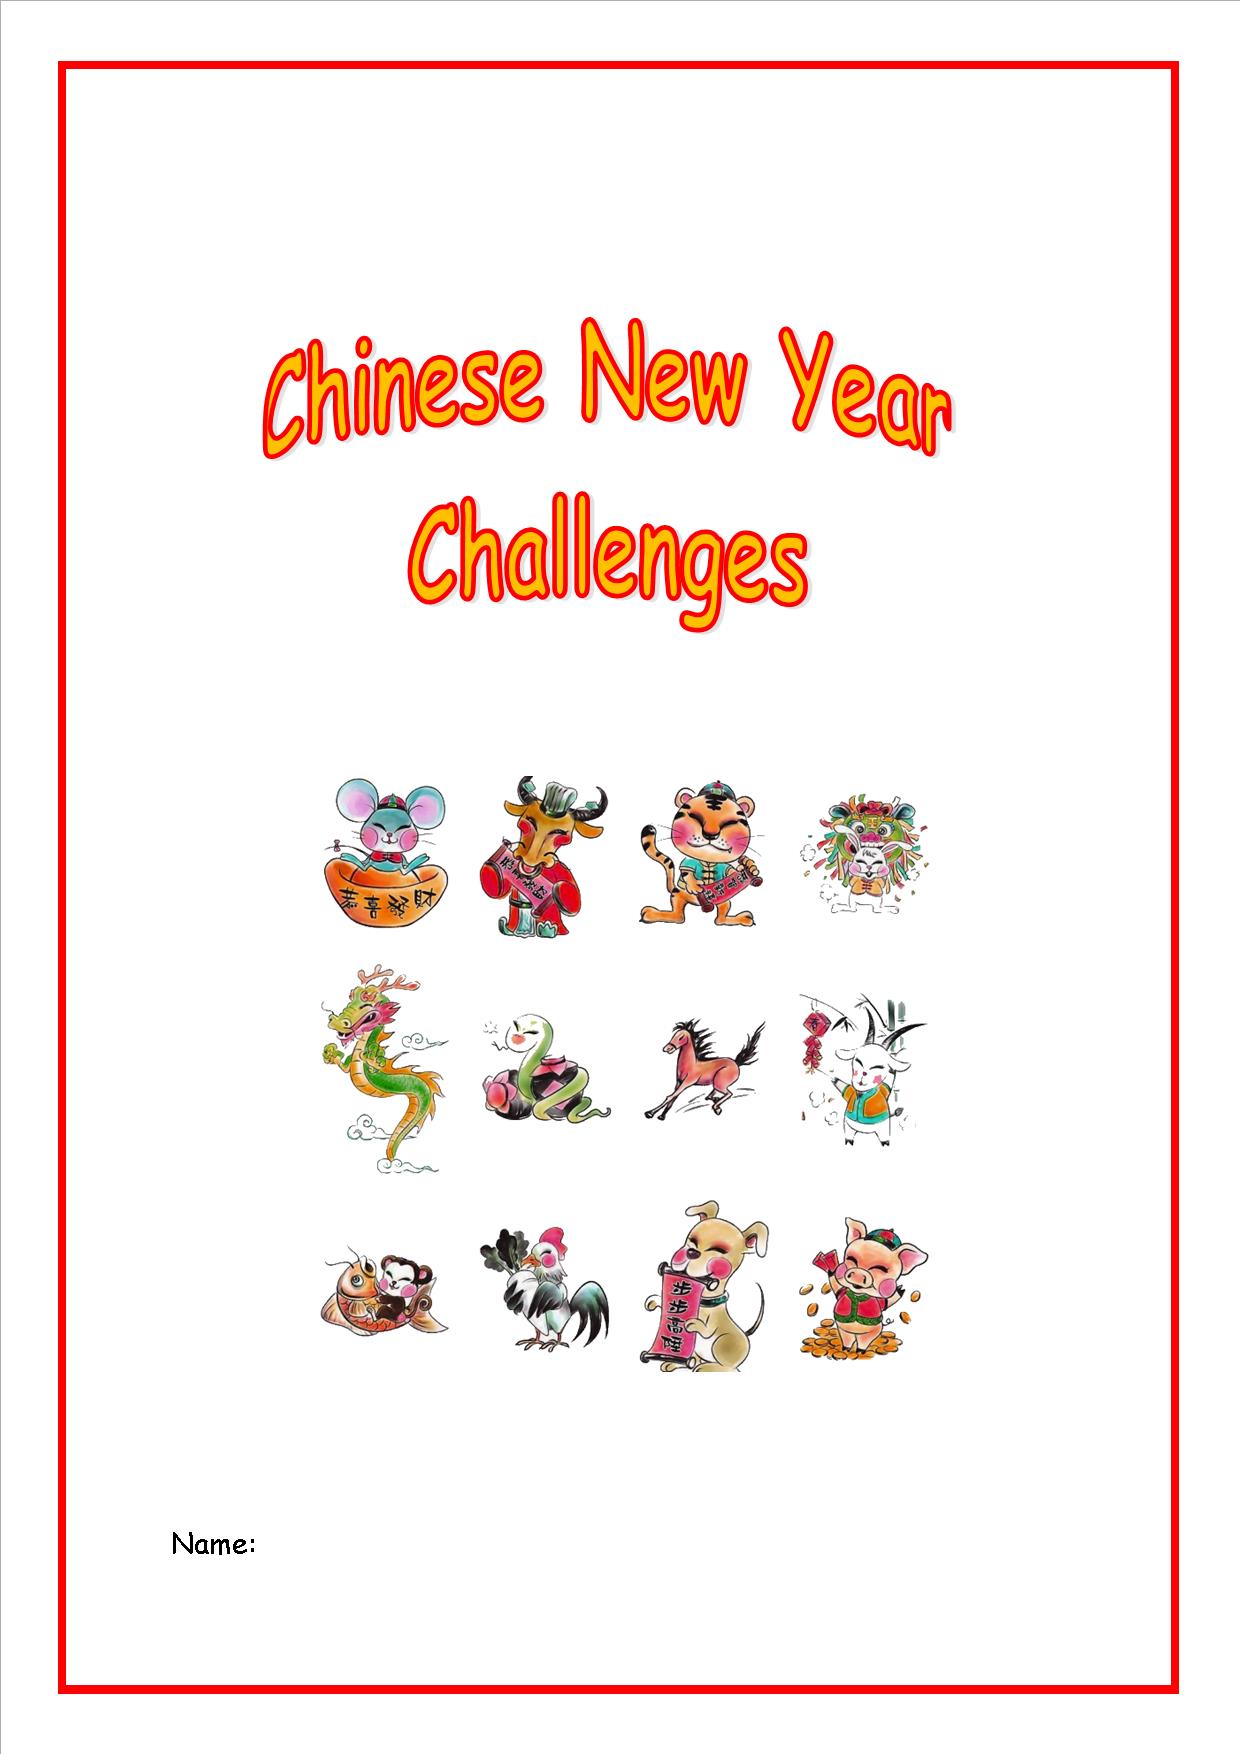 EYFS, KS1, KS2, SEN, Chinese New Year worksheets and activities